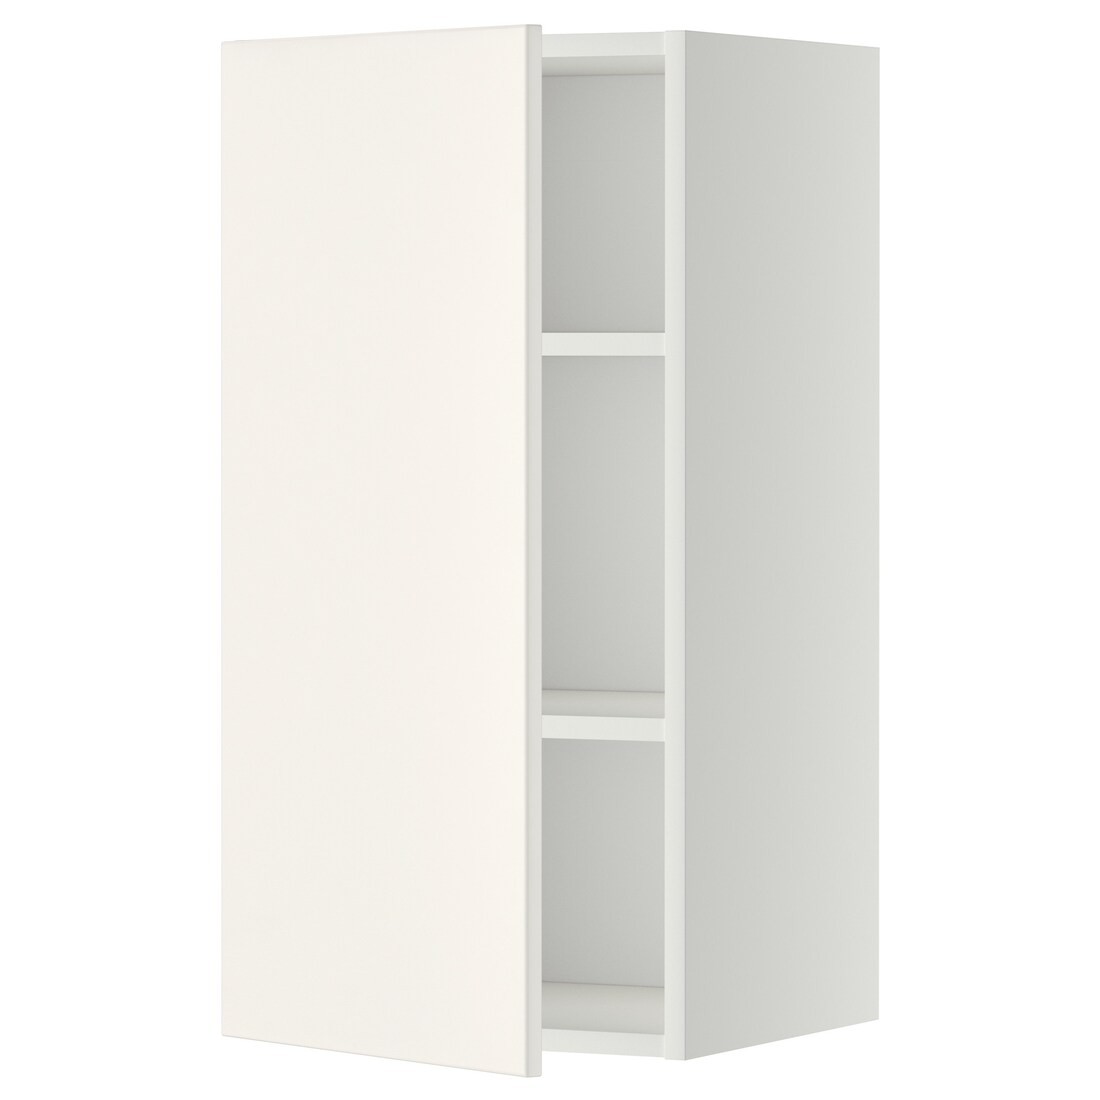 IKEA METOD МЕТОД Шкаф навесной с полками, белый / Veddinge белый, 40x80 см 29464527 294.645.27